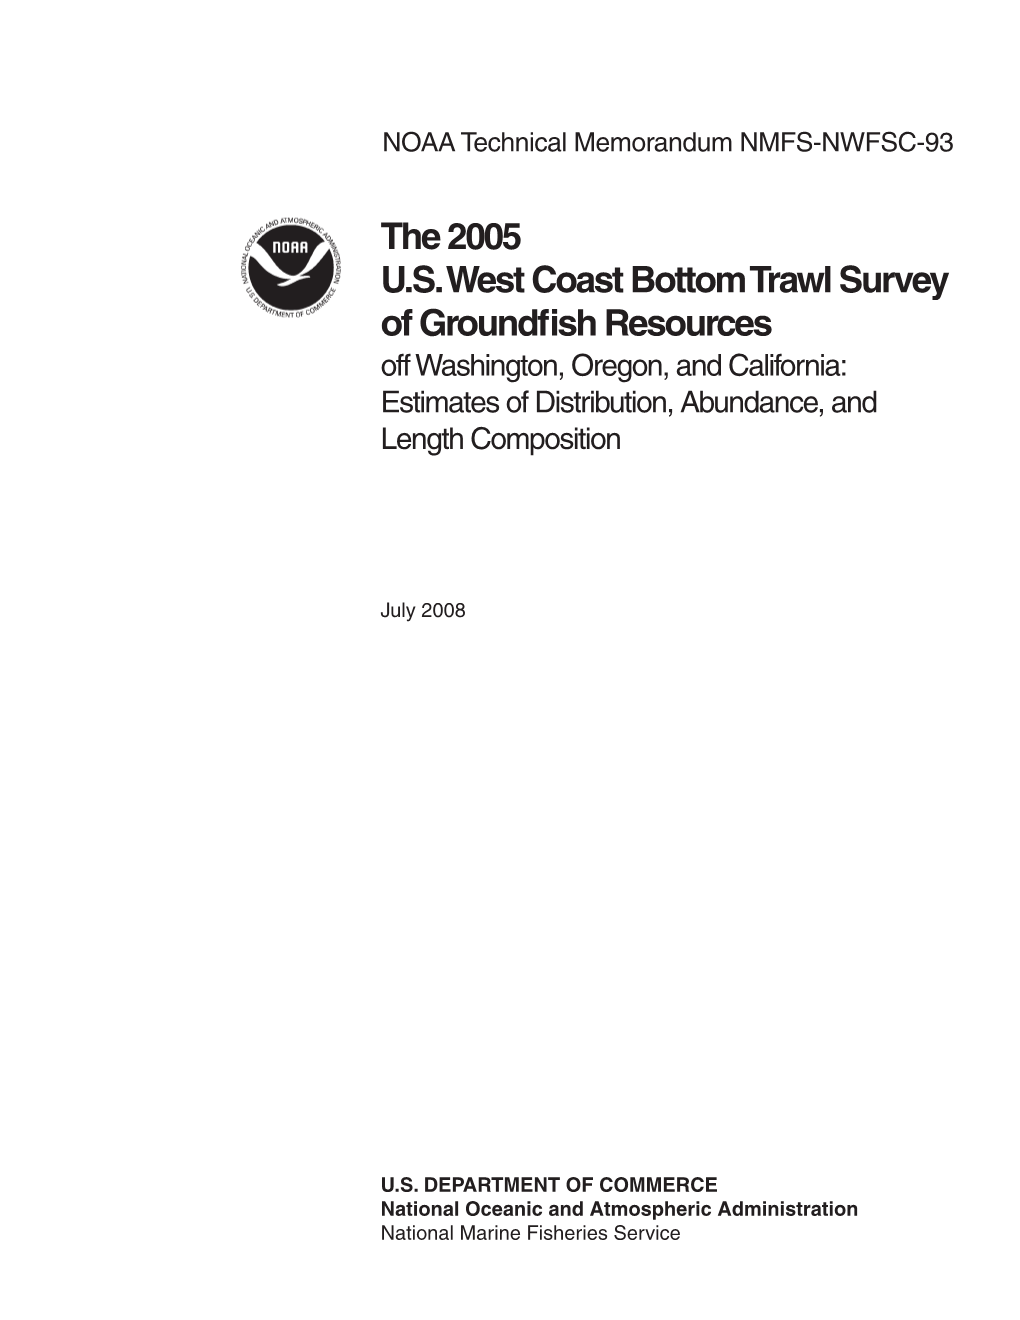 The 2005 US West Coast Bottom Trawl Survey of Groundfish Resources Off Washington, Oregon, and California: Estimates of Distribution, Abundance, and Length Composition